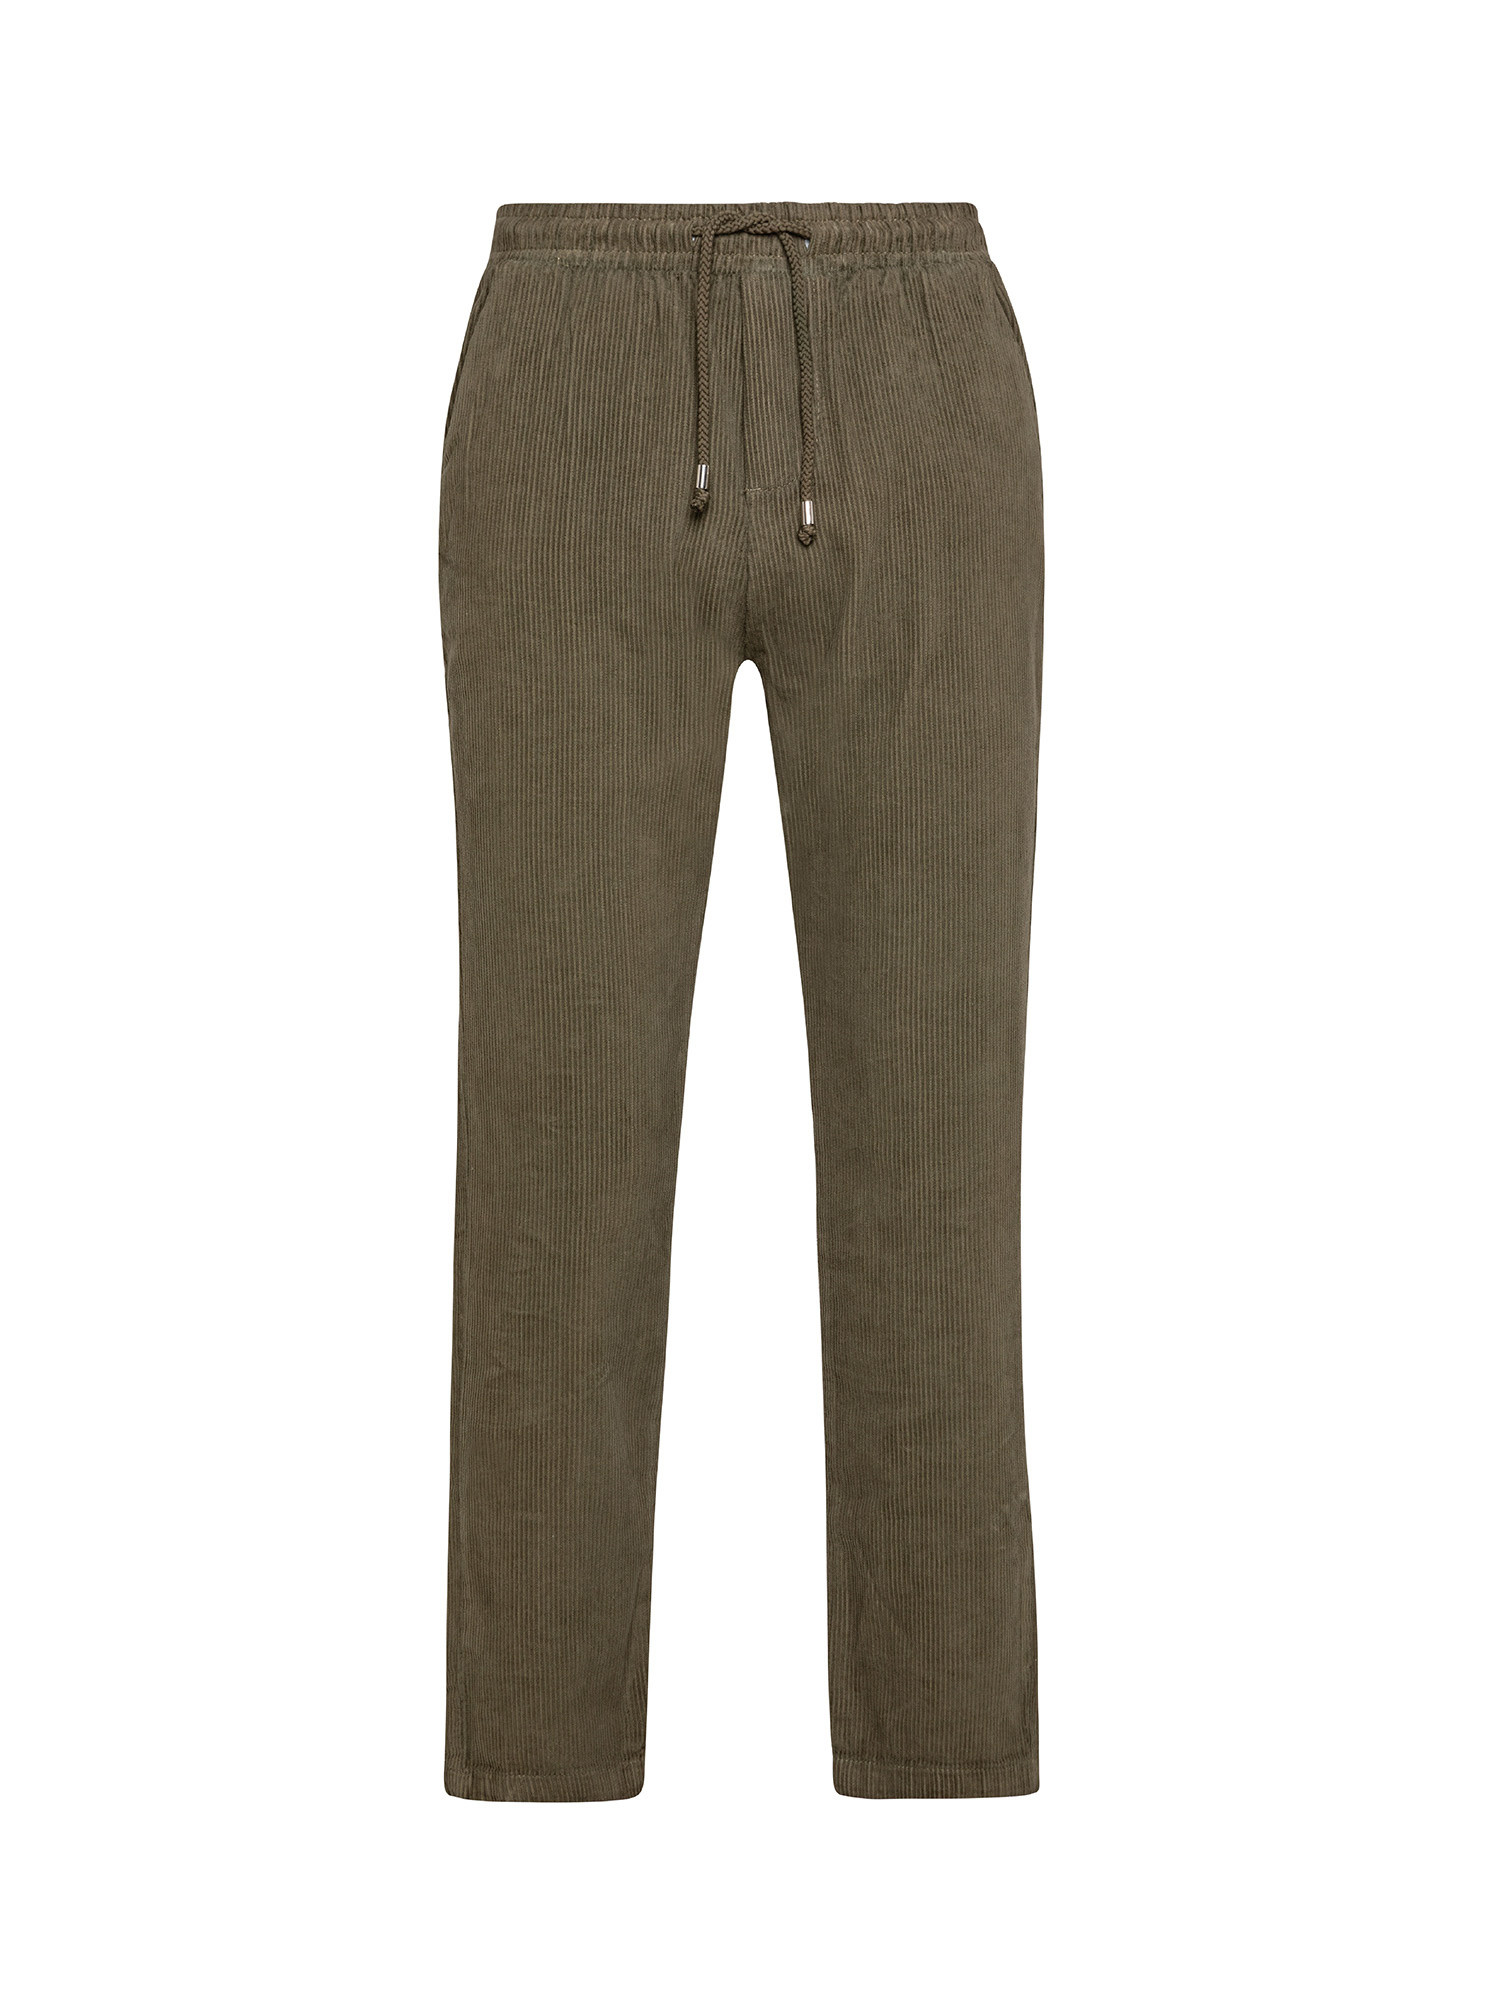 JCT - Pantalone in velluto, Verde oliva, large image number 0